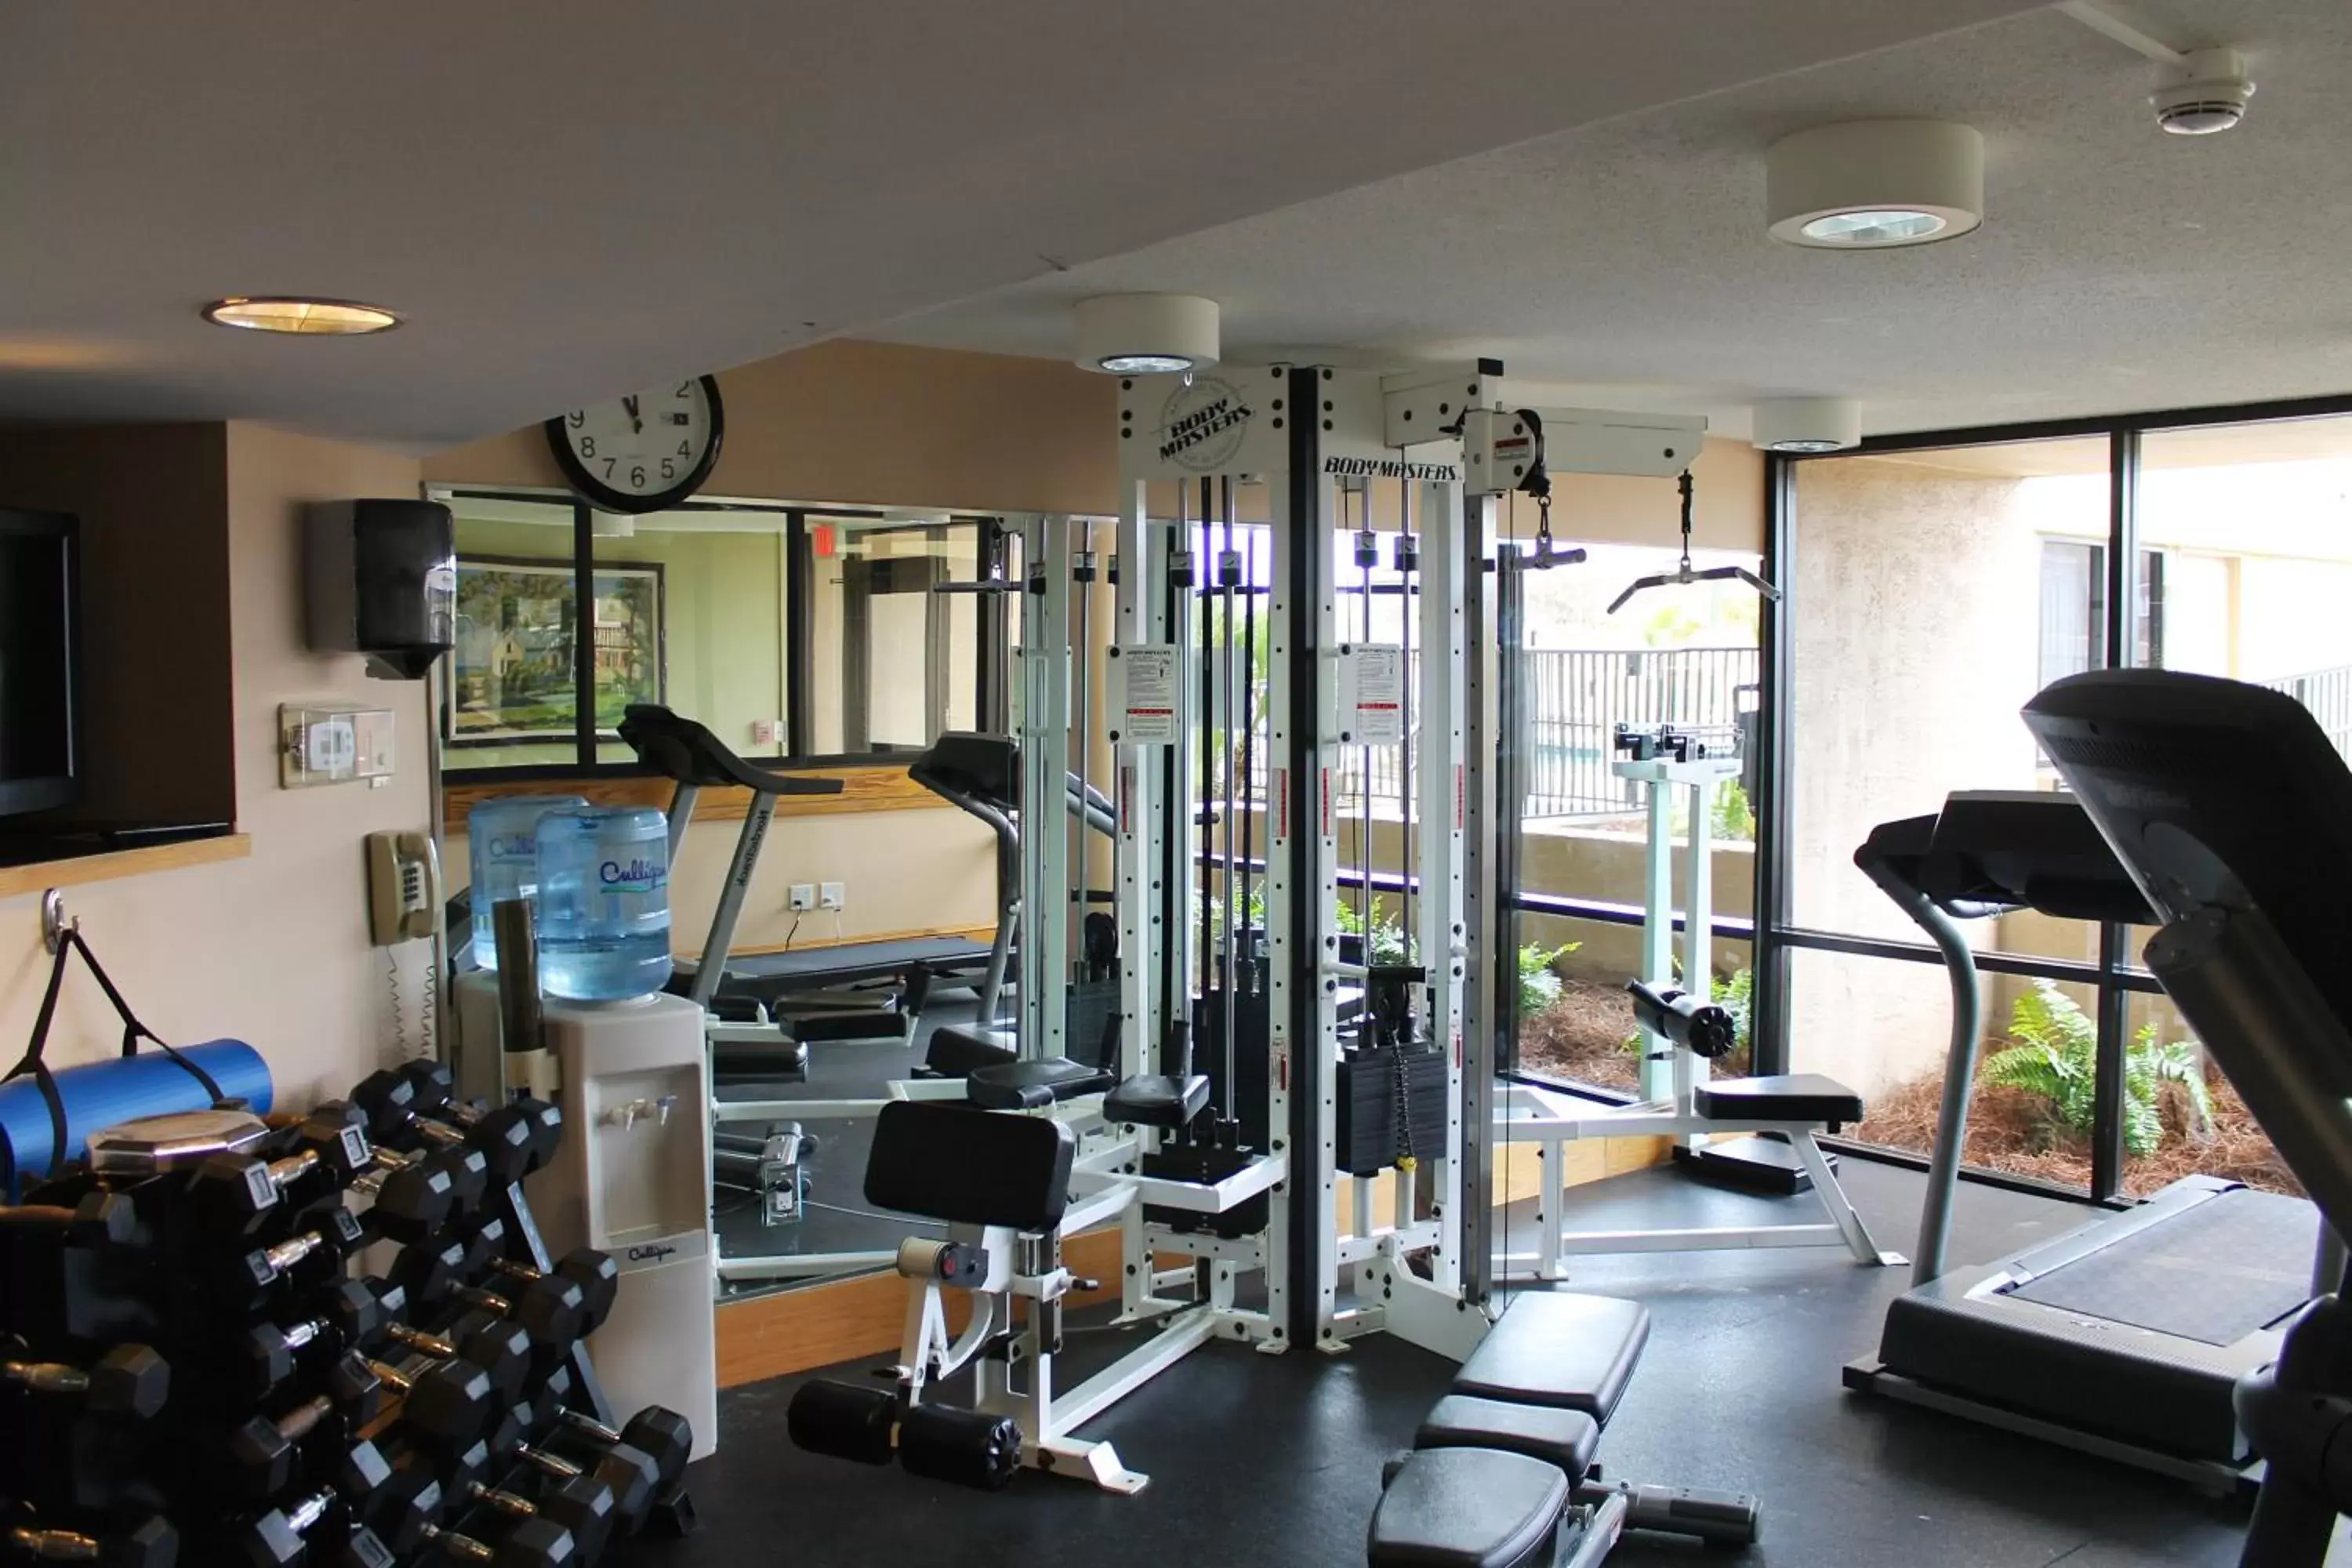 Fitness centre/facilities, Fitness Center/Facilities in Wyndham Garden Fort Walton Beach Destin